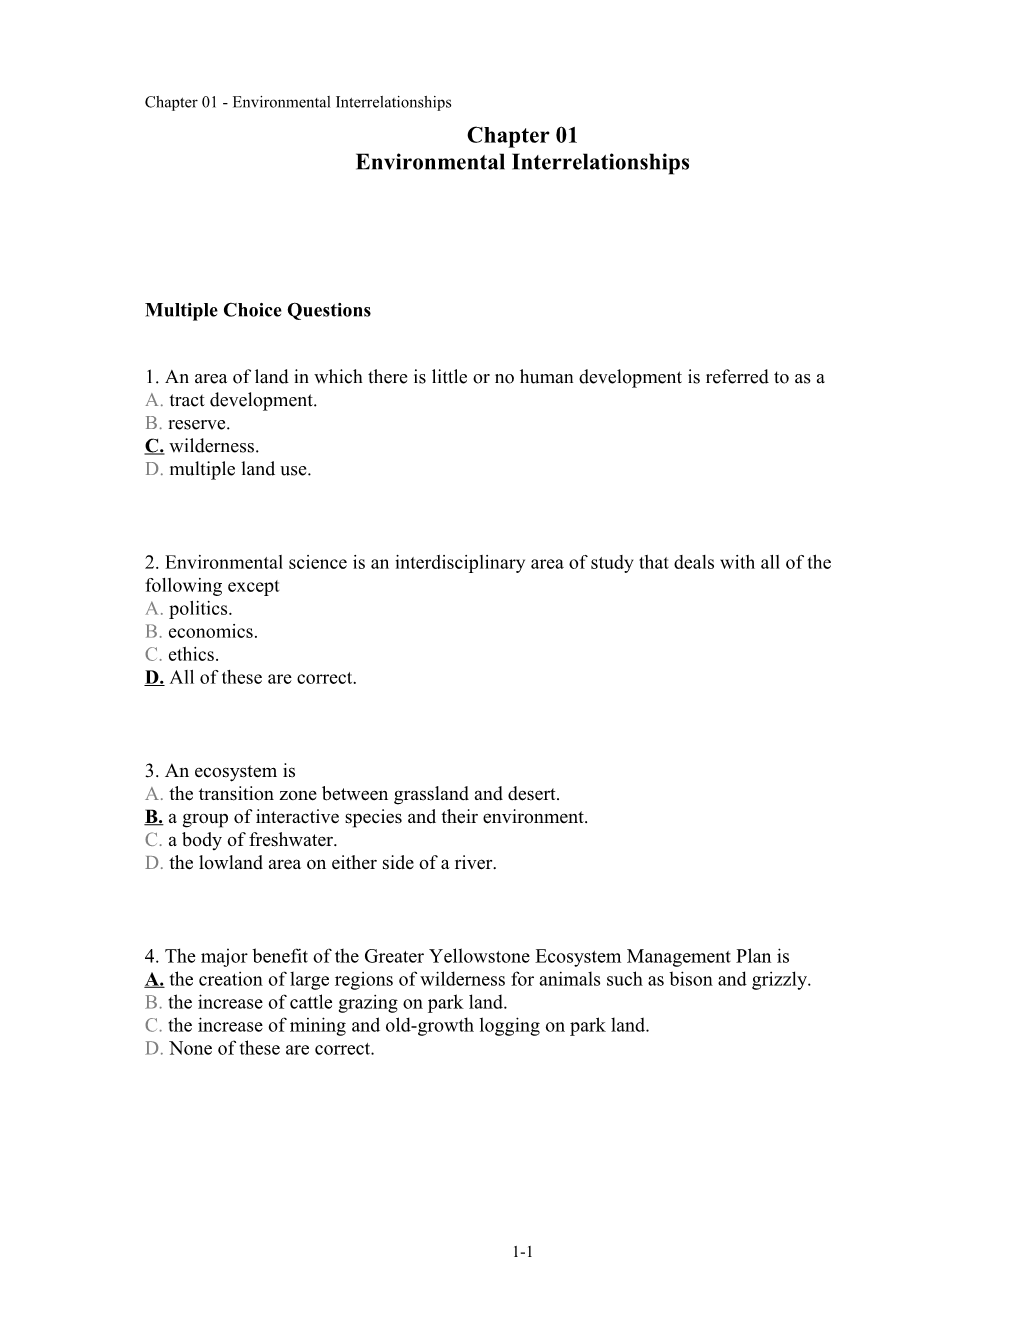 Chapter 01 Environmental Interrelationships